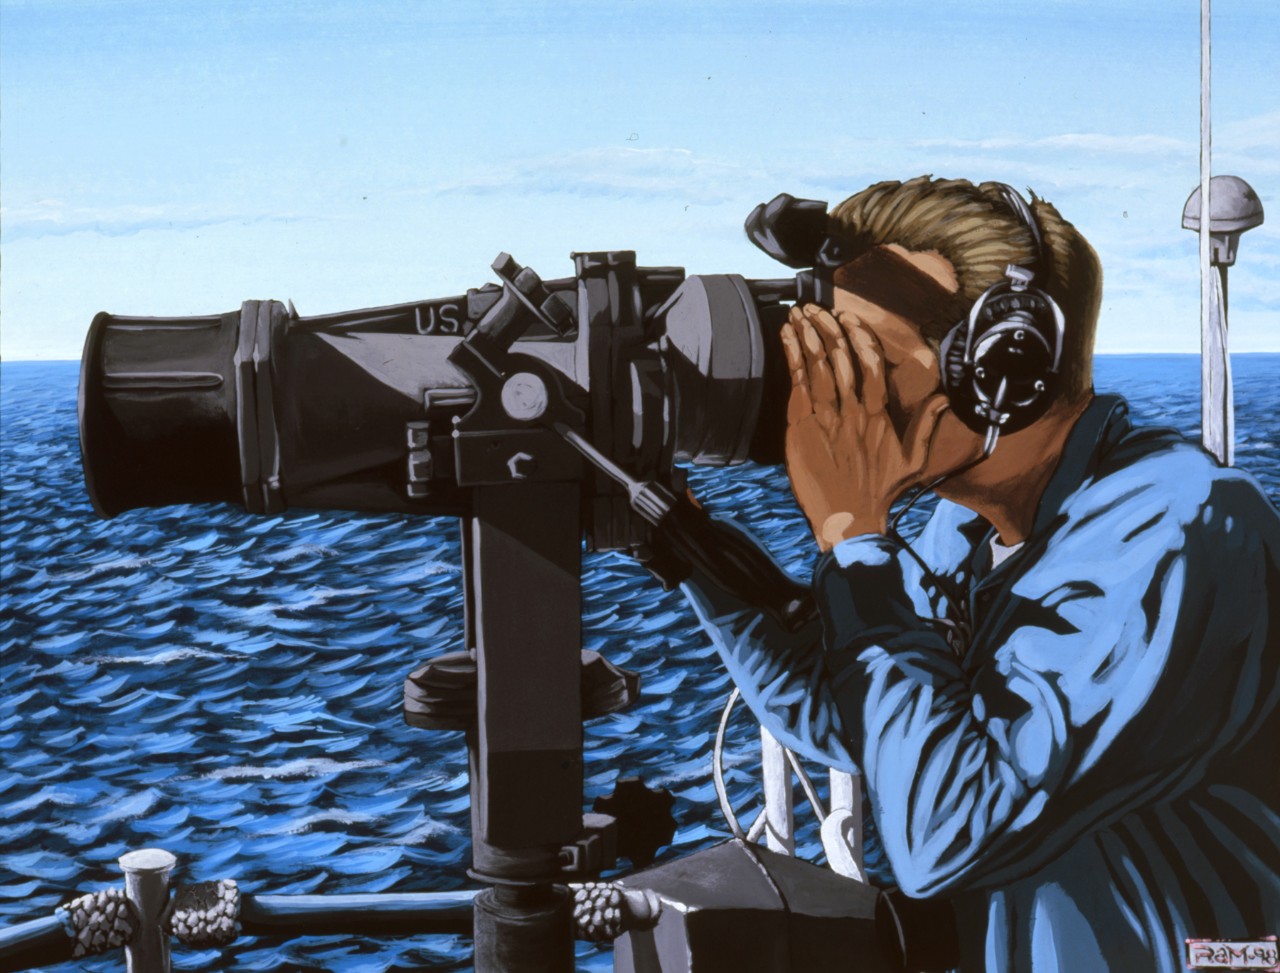 A sailors looks through binoculars on watch